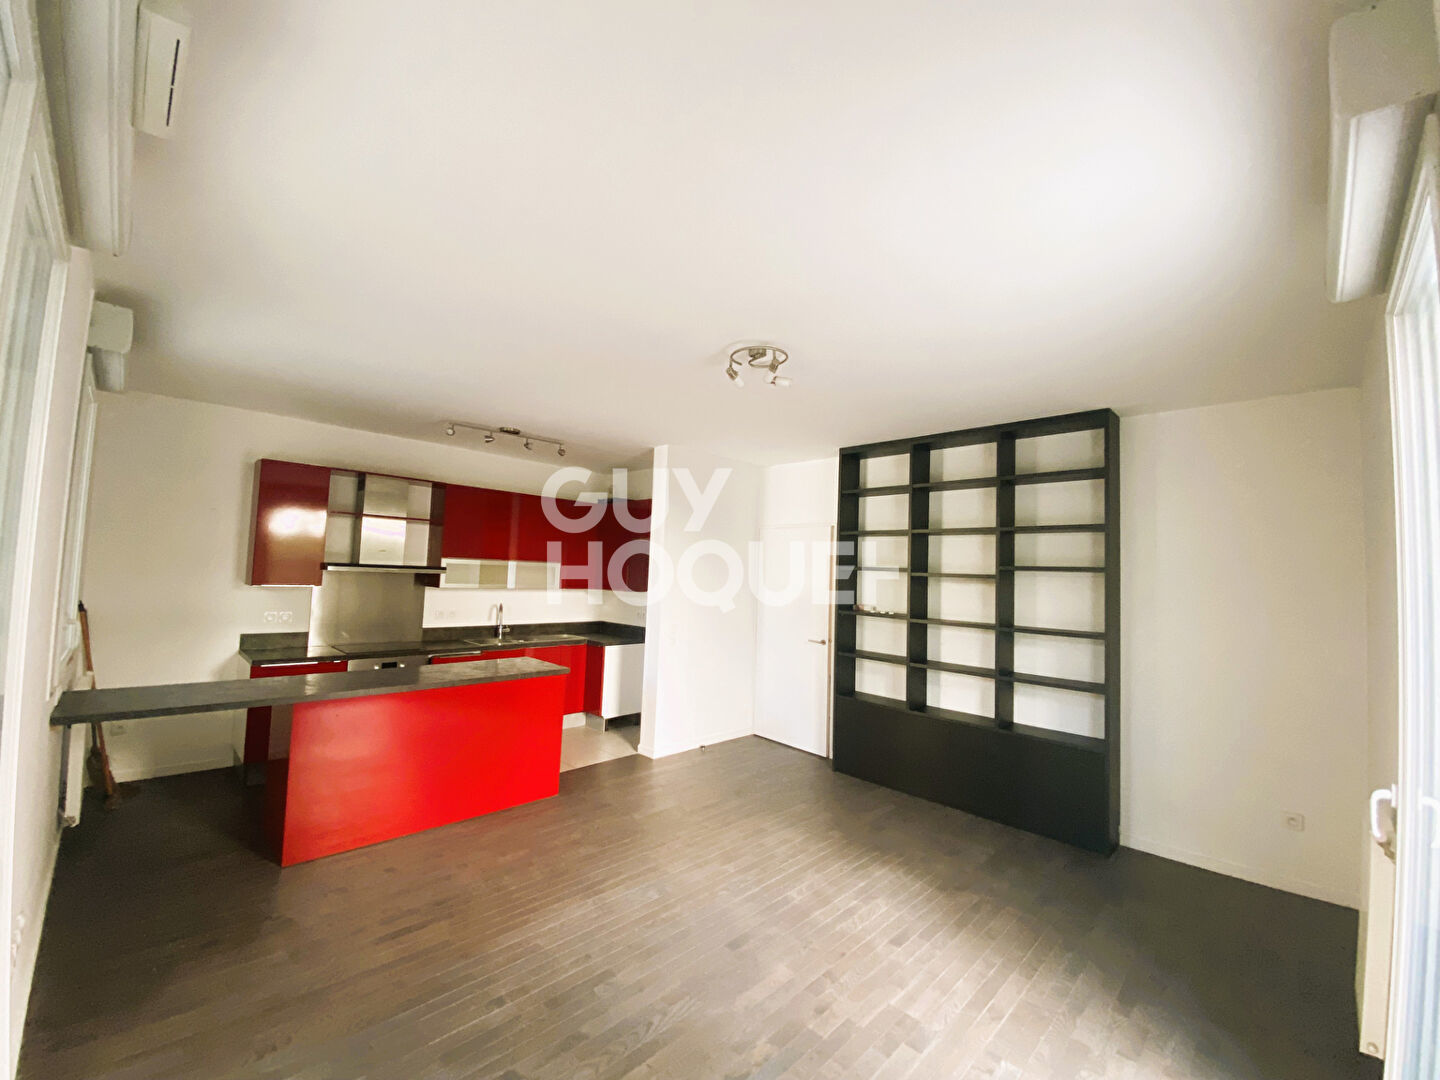 Appartement a louer malakoff - 2 pièce(s) - 51.02 m2 - Surfyn